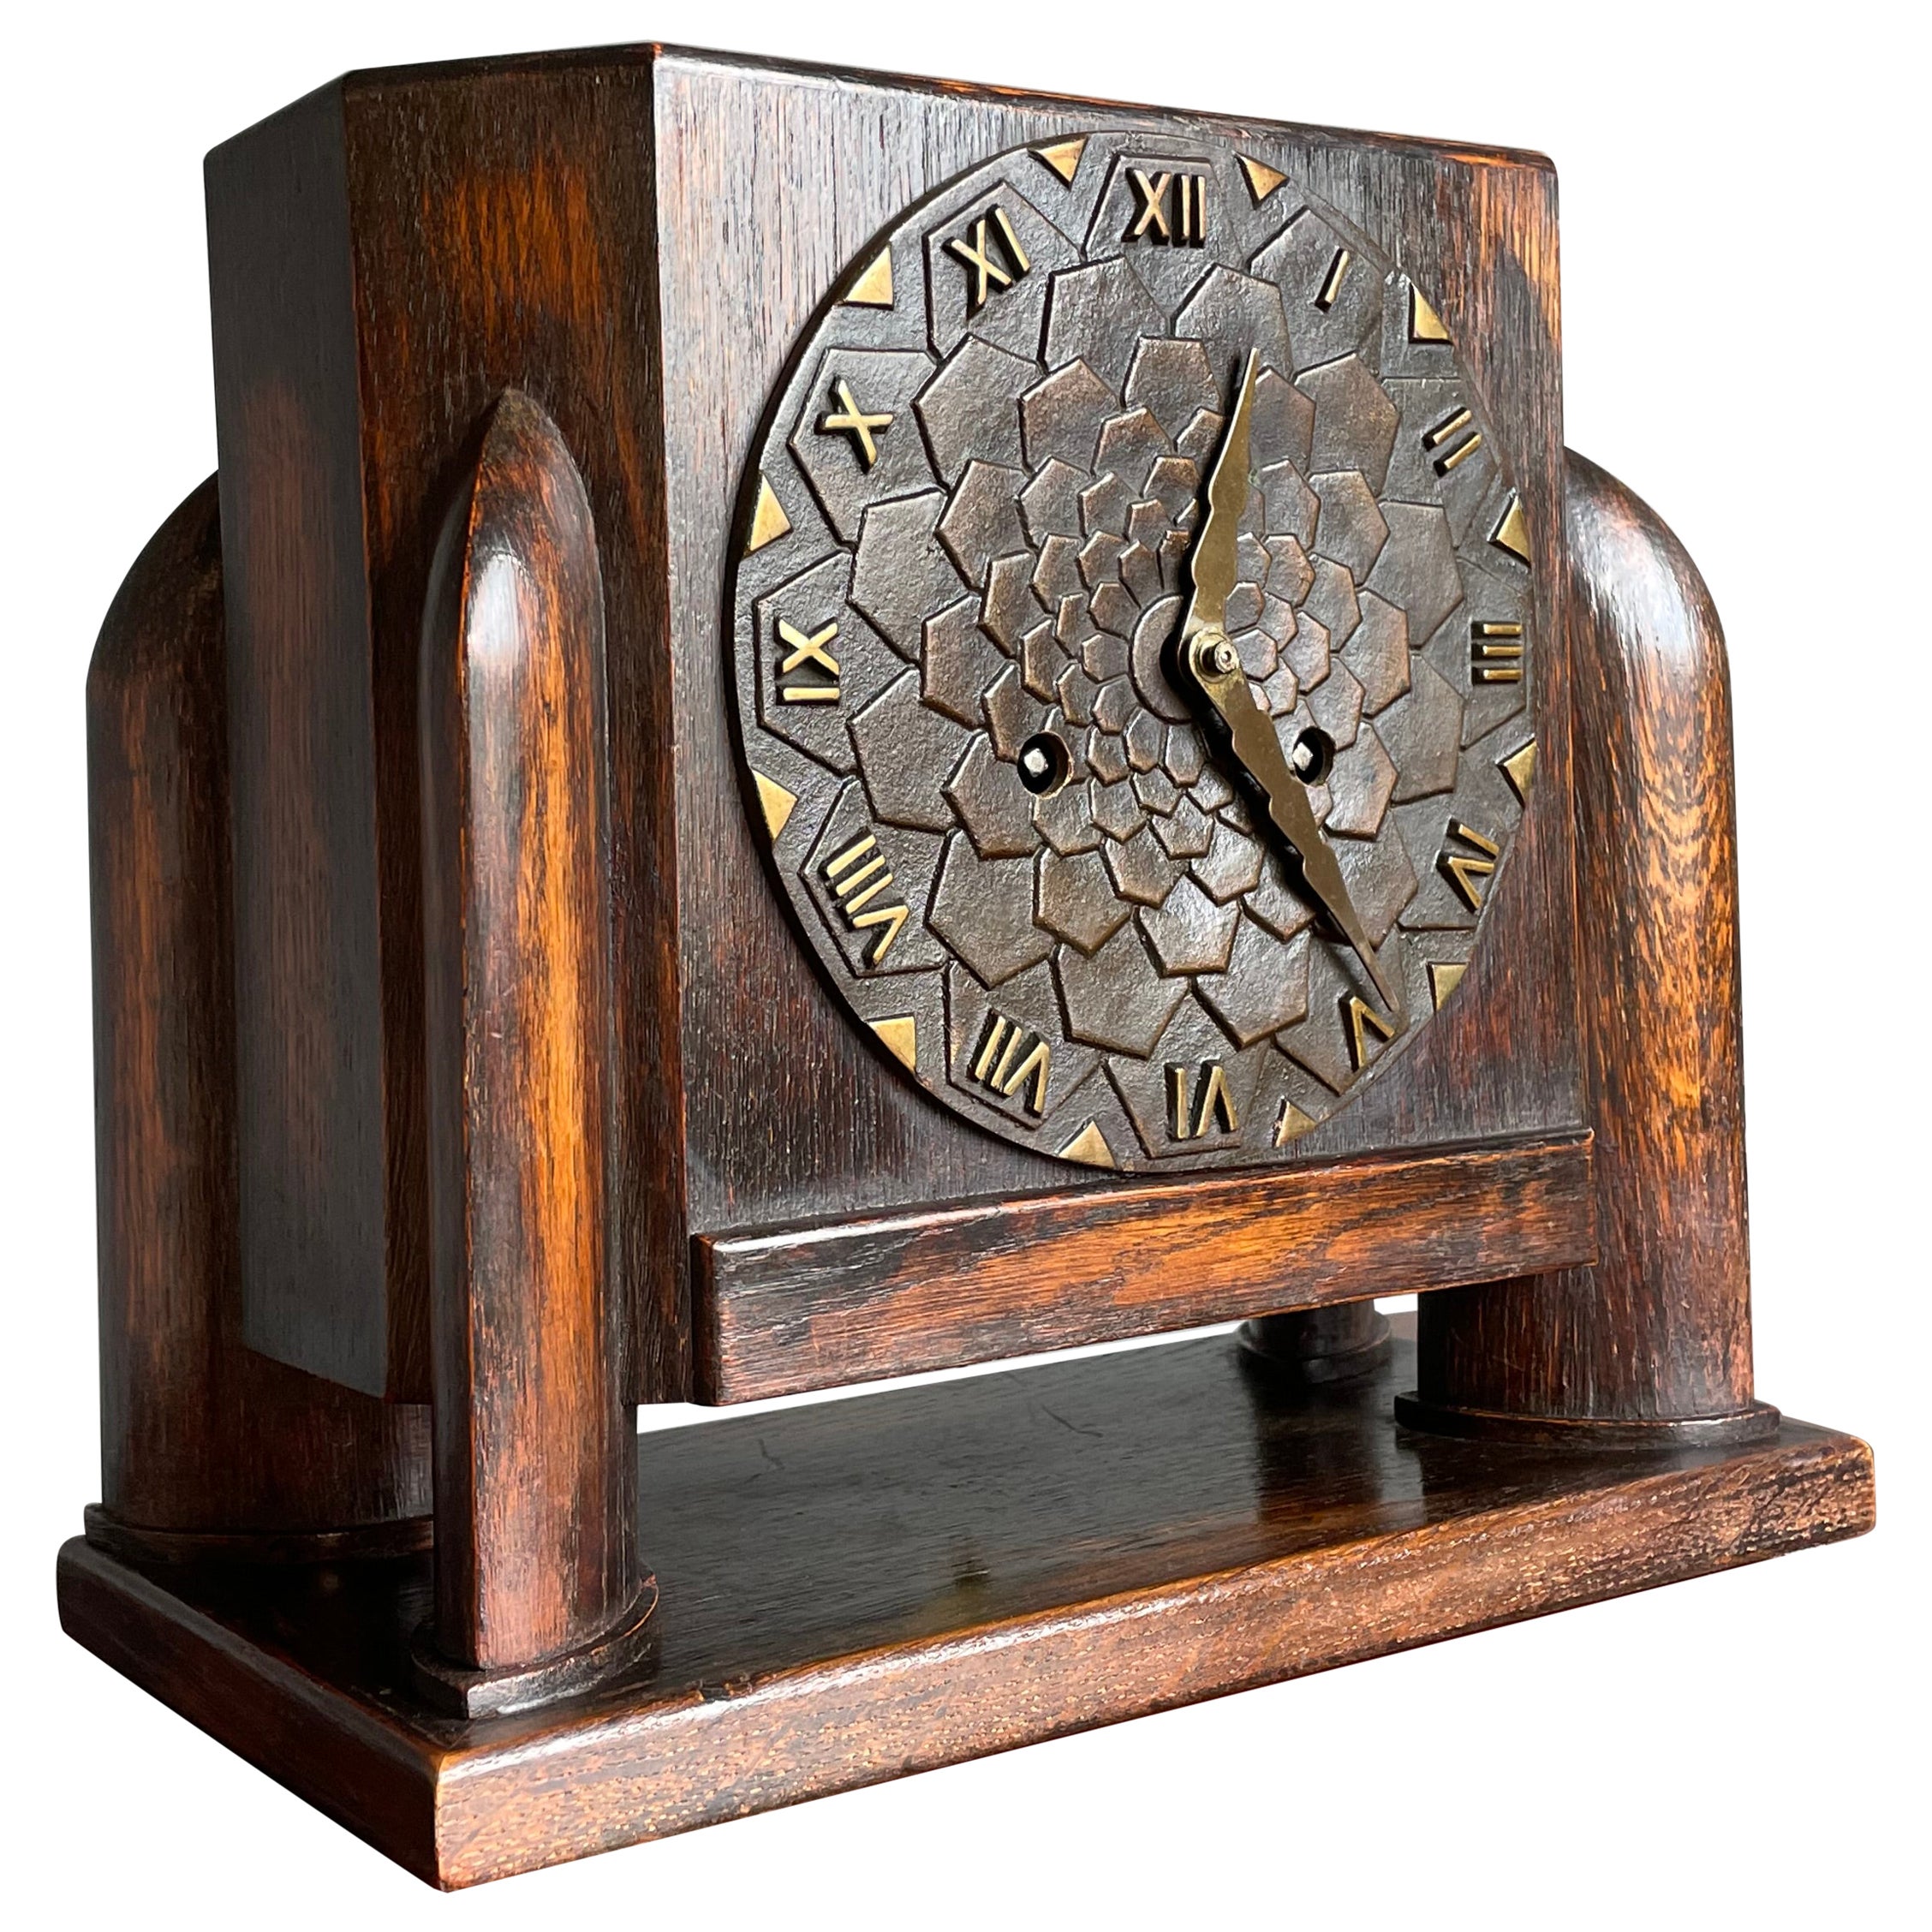 Dutch Arts & Crafts Oak Mantle / Desk Clock with Stunning Bronze Dial Face 1915